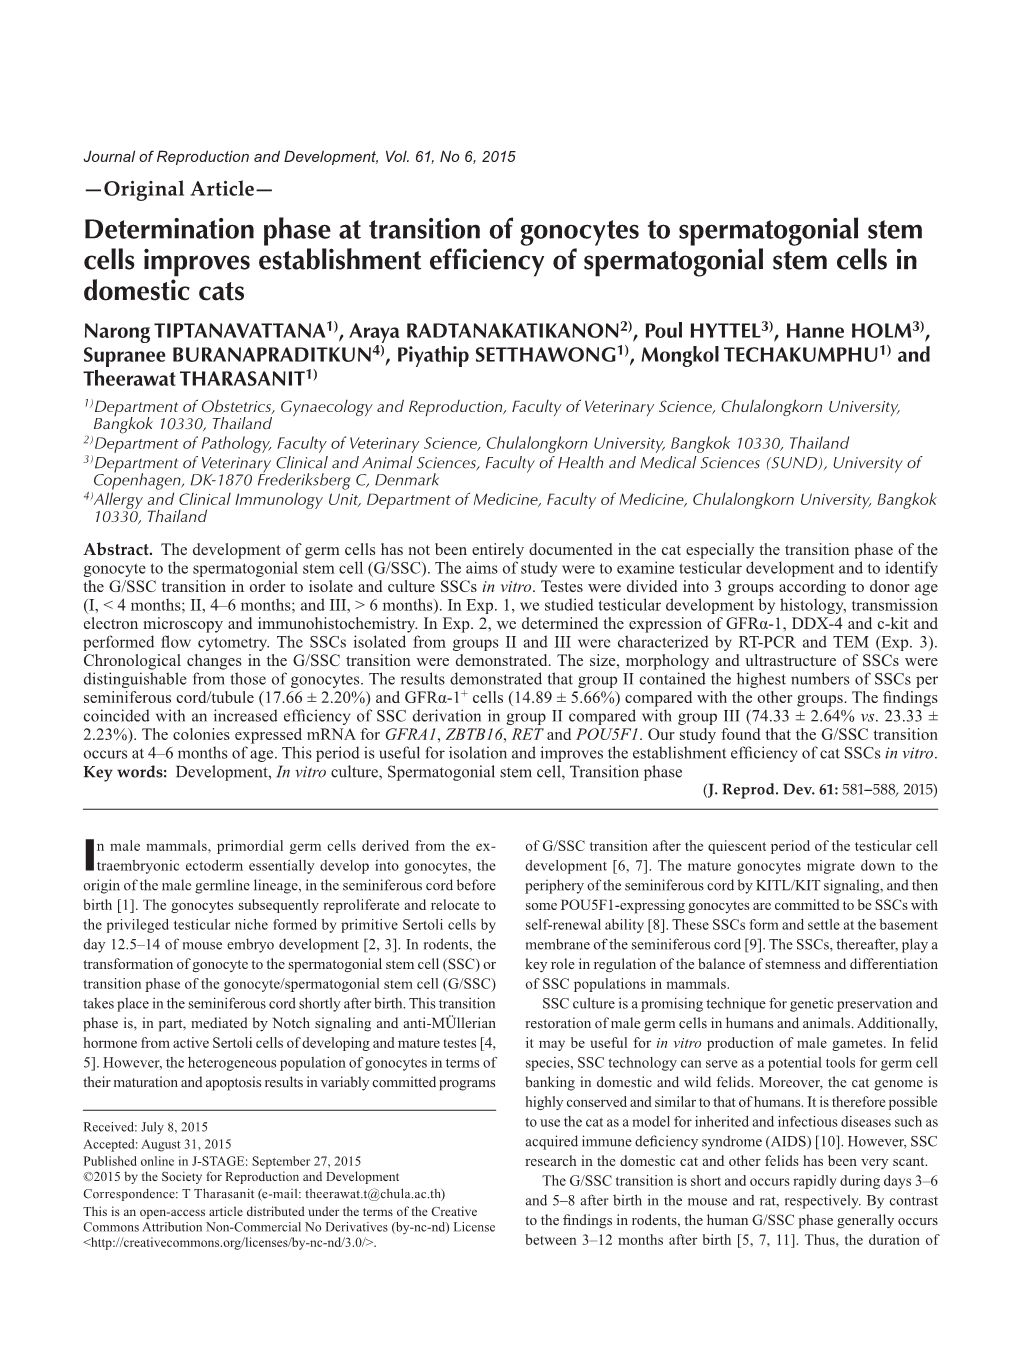 Determination Phase at Transition of Gonocytes to Spermatogonial Stem Cells Improves Establishment Efficiency of Spermatogonial